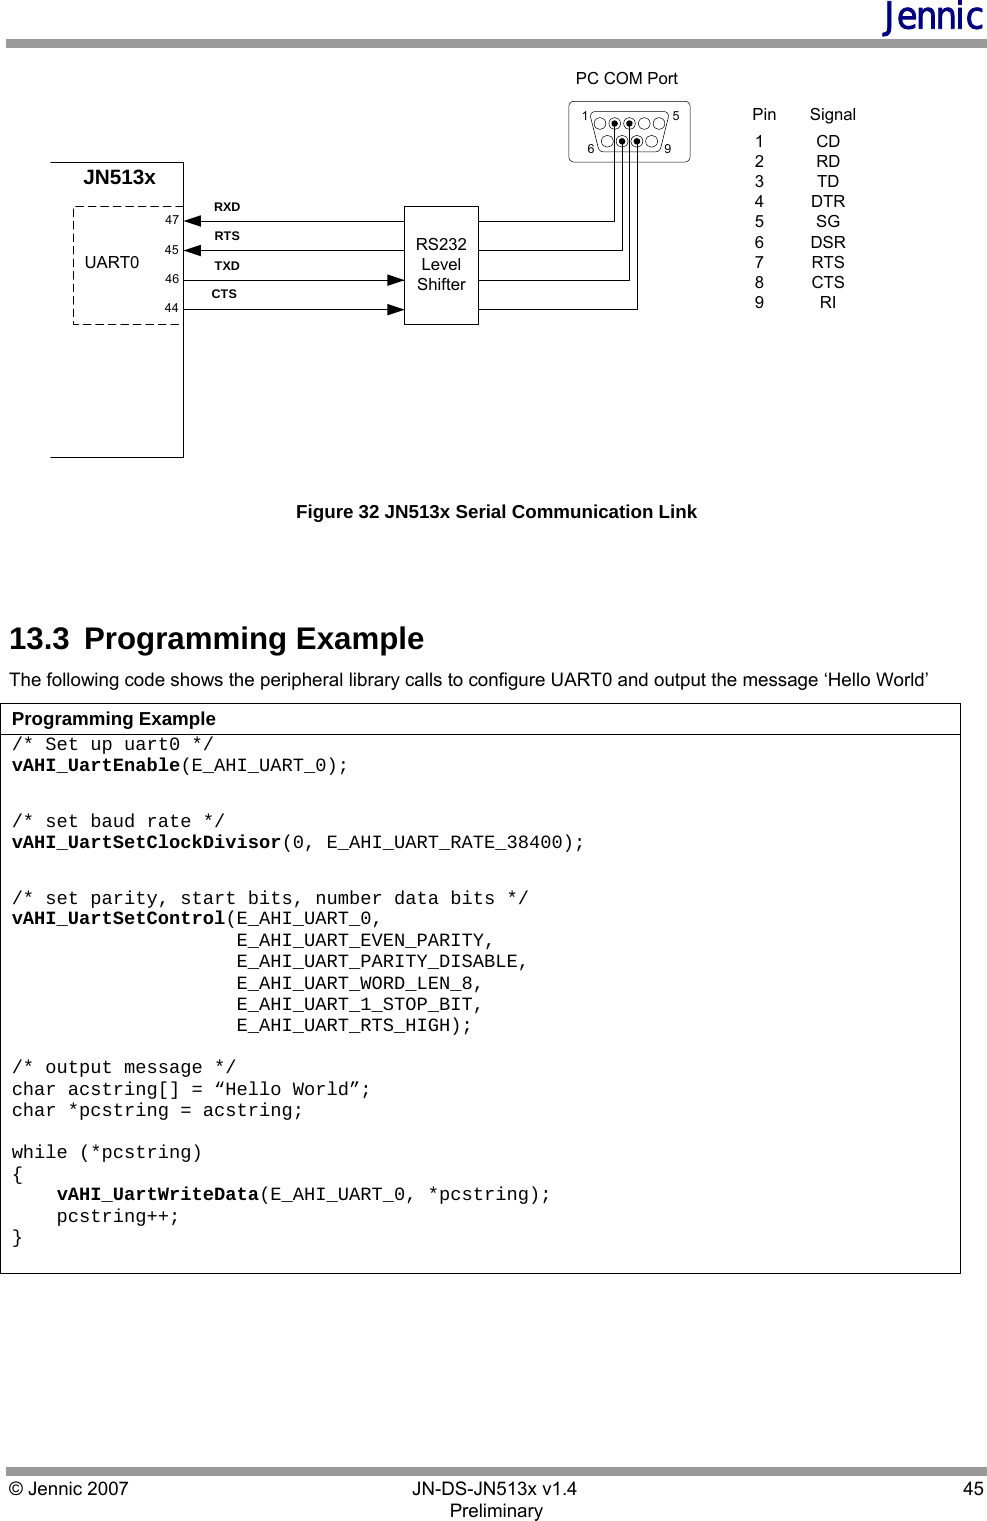 Jennic © Jennic 2007        JN-DS-JN513x v1.4  45 Preliminary JN513xCTSRTSRXDTXDUART0RS232LevelShifter123456789CDRDTDDTRSGDSRRTSCTSRIPC COM PortPin Signal156947464445 Figure 32 JN513x Serial Communication Link   13.3  Programming Example The following code shows the peripheral library calls to configure UART0 and output the message ‘Hello World’ Programming Example /* Set up uart0 */ vAHI_UartEnable(E_AHI_UART_0);   /* set baud rate */ vAHI_UartSetClockDivisor(0, E_AHI_UART_RATE_38400);  /* set parity, start bits, number data bits */ vAHI_UartSetControl(E_AHI_UART_0,                      E_AHI_UART_EVEN_PARITY,                     E_AHI_UART_PARITY_DISABLE,                      E_AHI_UART_WORD_LEN_8,                     E_AHI_UART_1_STOP_BIT,                     E_AHI_UART_RTS_HIGH);  /* output message */ char acstring[] = “Hello World”; char *pcstring = acstring;  while (*pcstring) {     vAHI_UartWriteData(E_AHI_UART_0, *pcstring);     pcstring++; }   